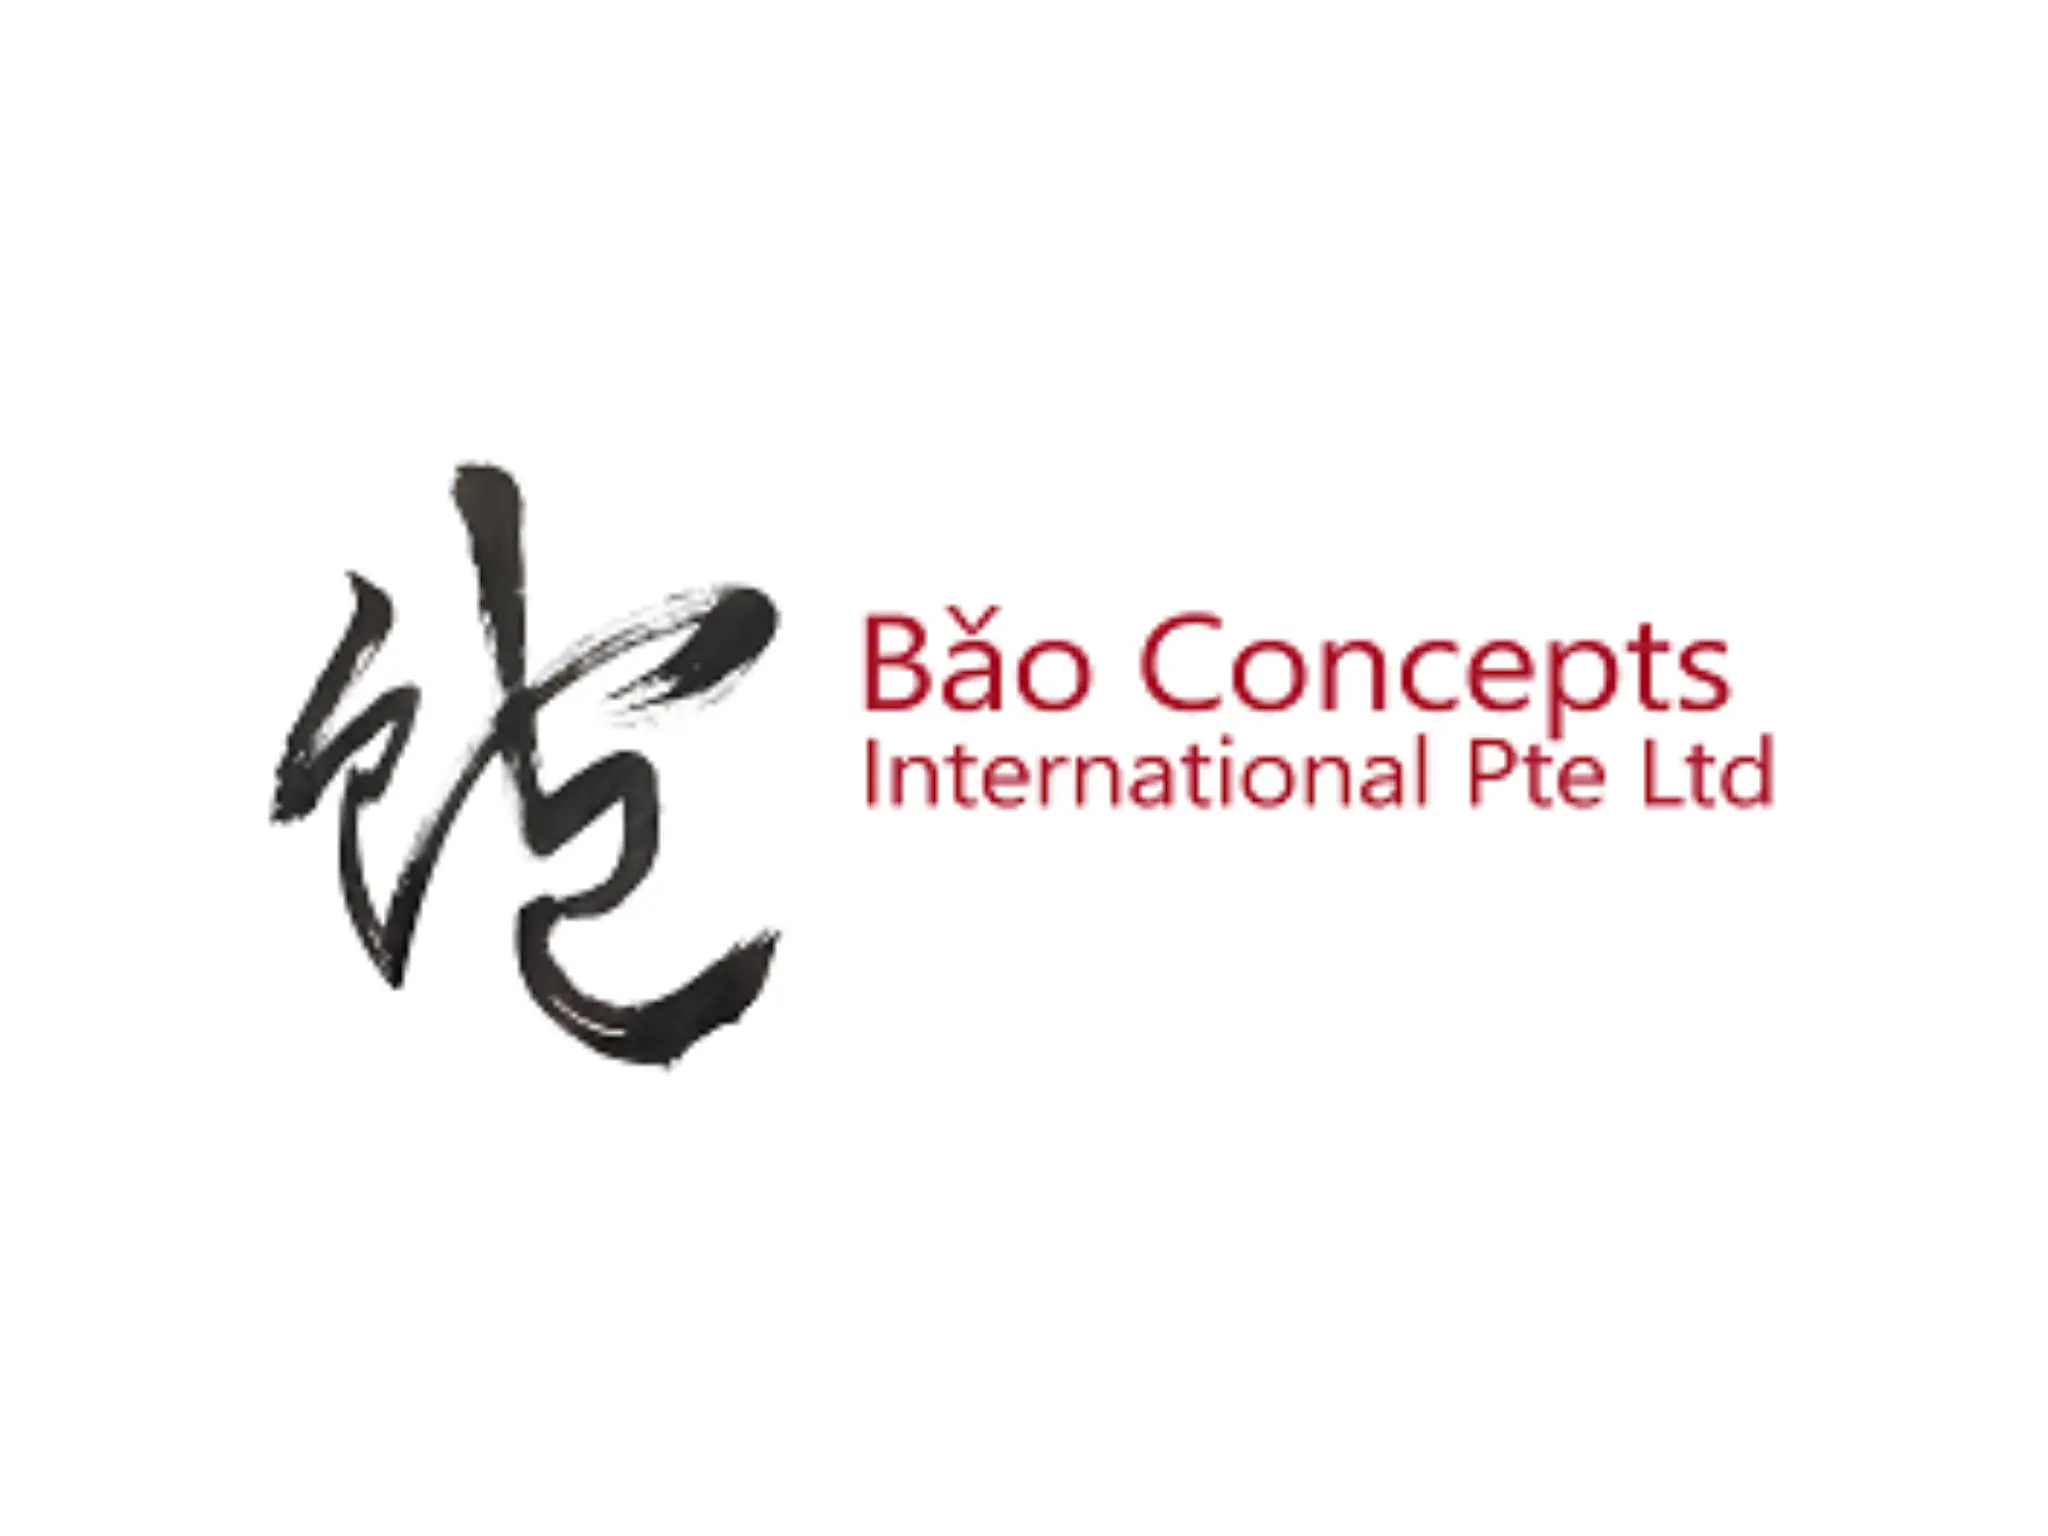 BAO CONCEPTS INTERNATIONAL